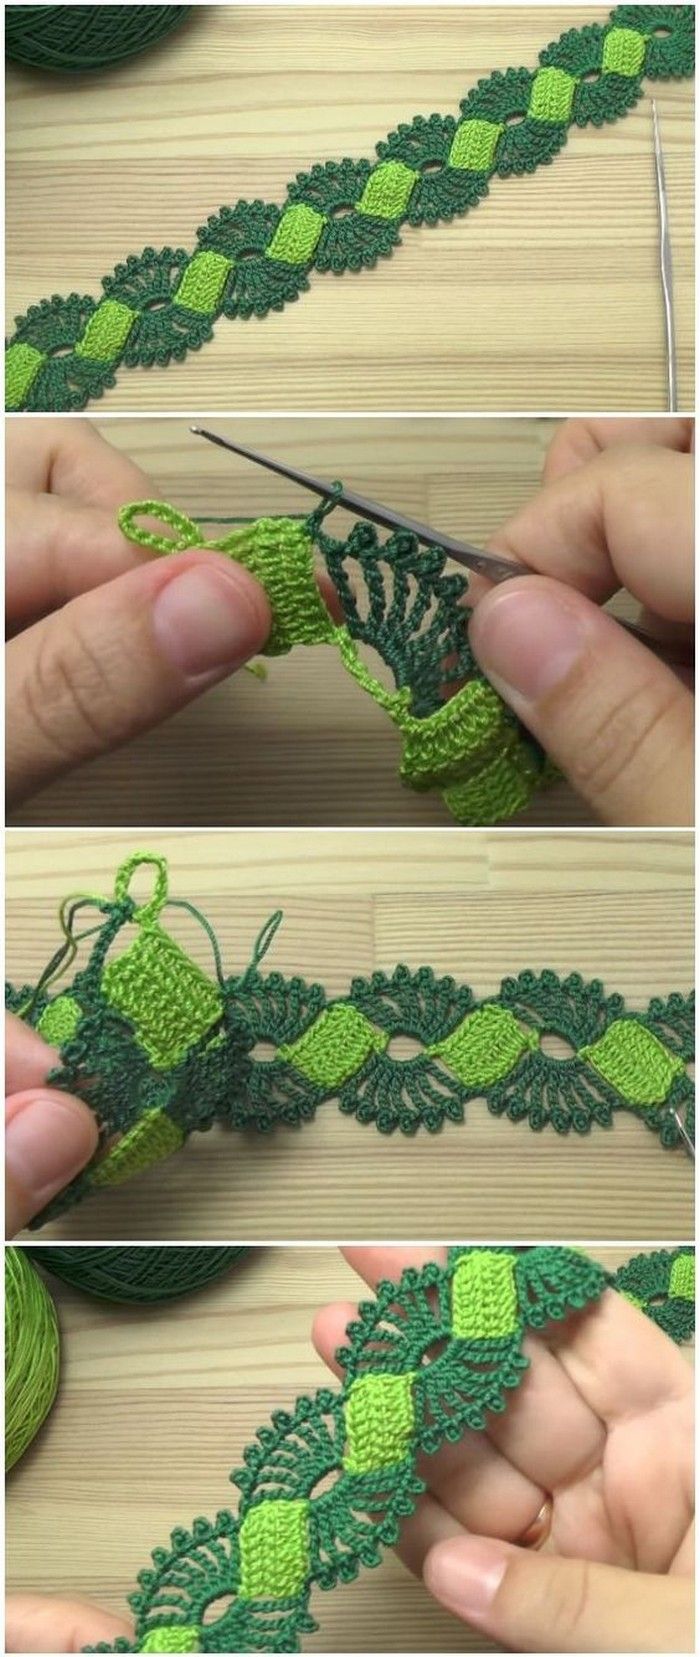 Crochet-Chic-Lace-Best-Design.jpg